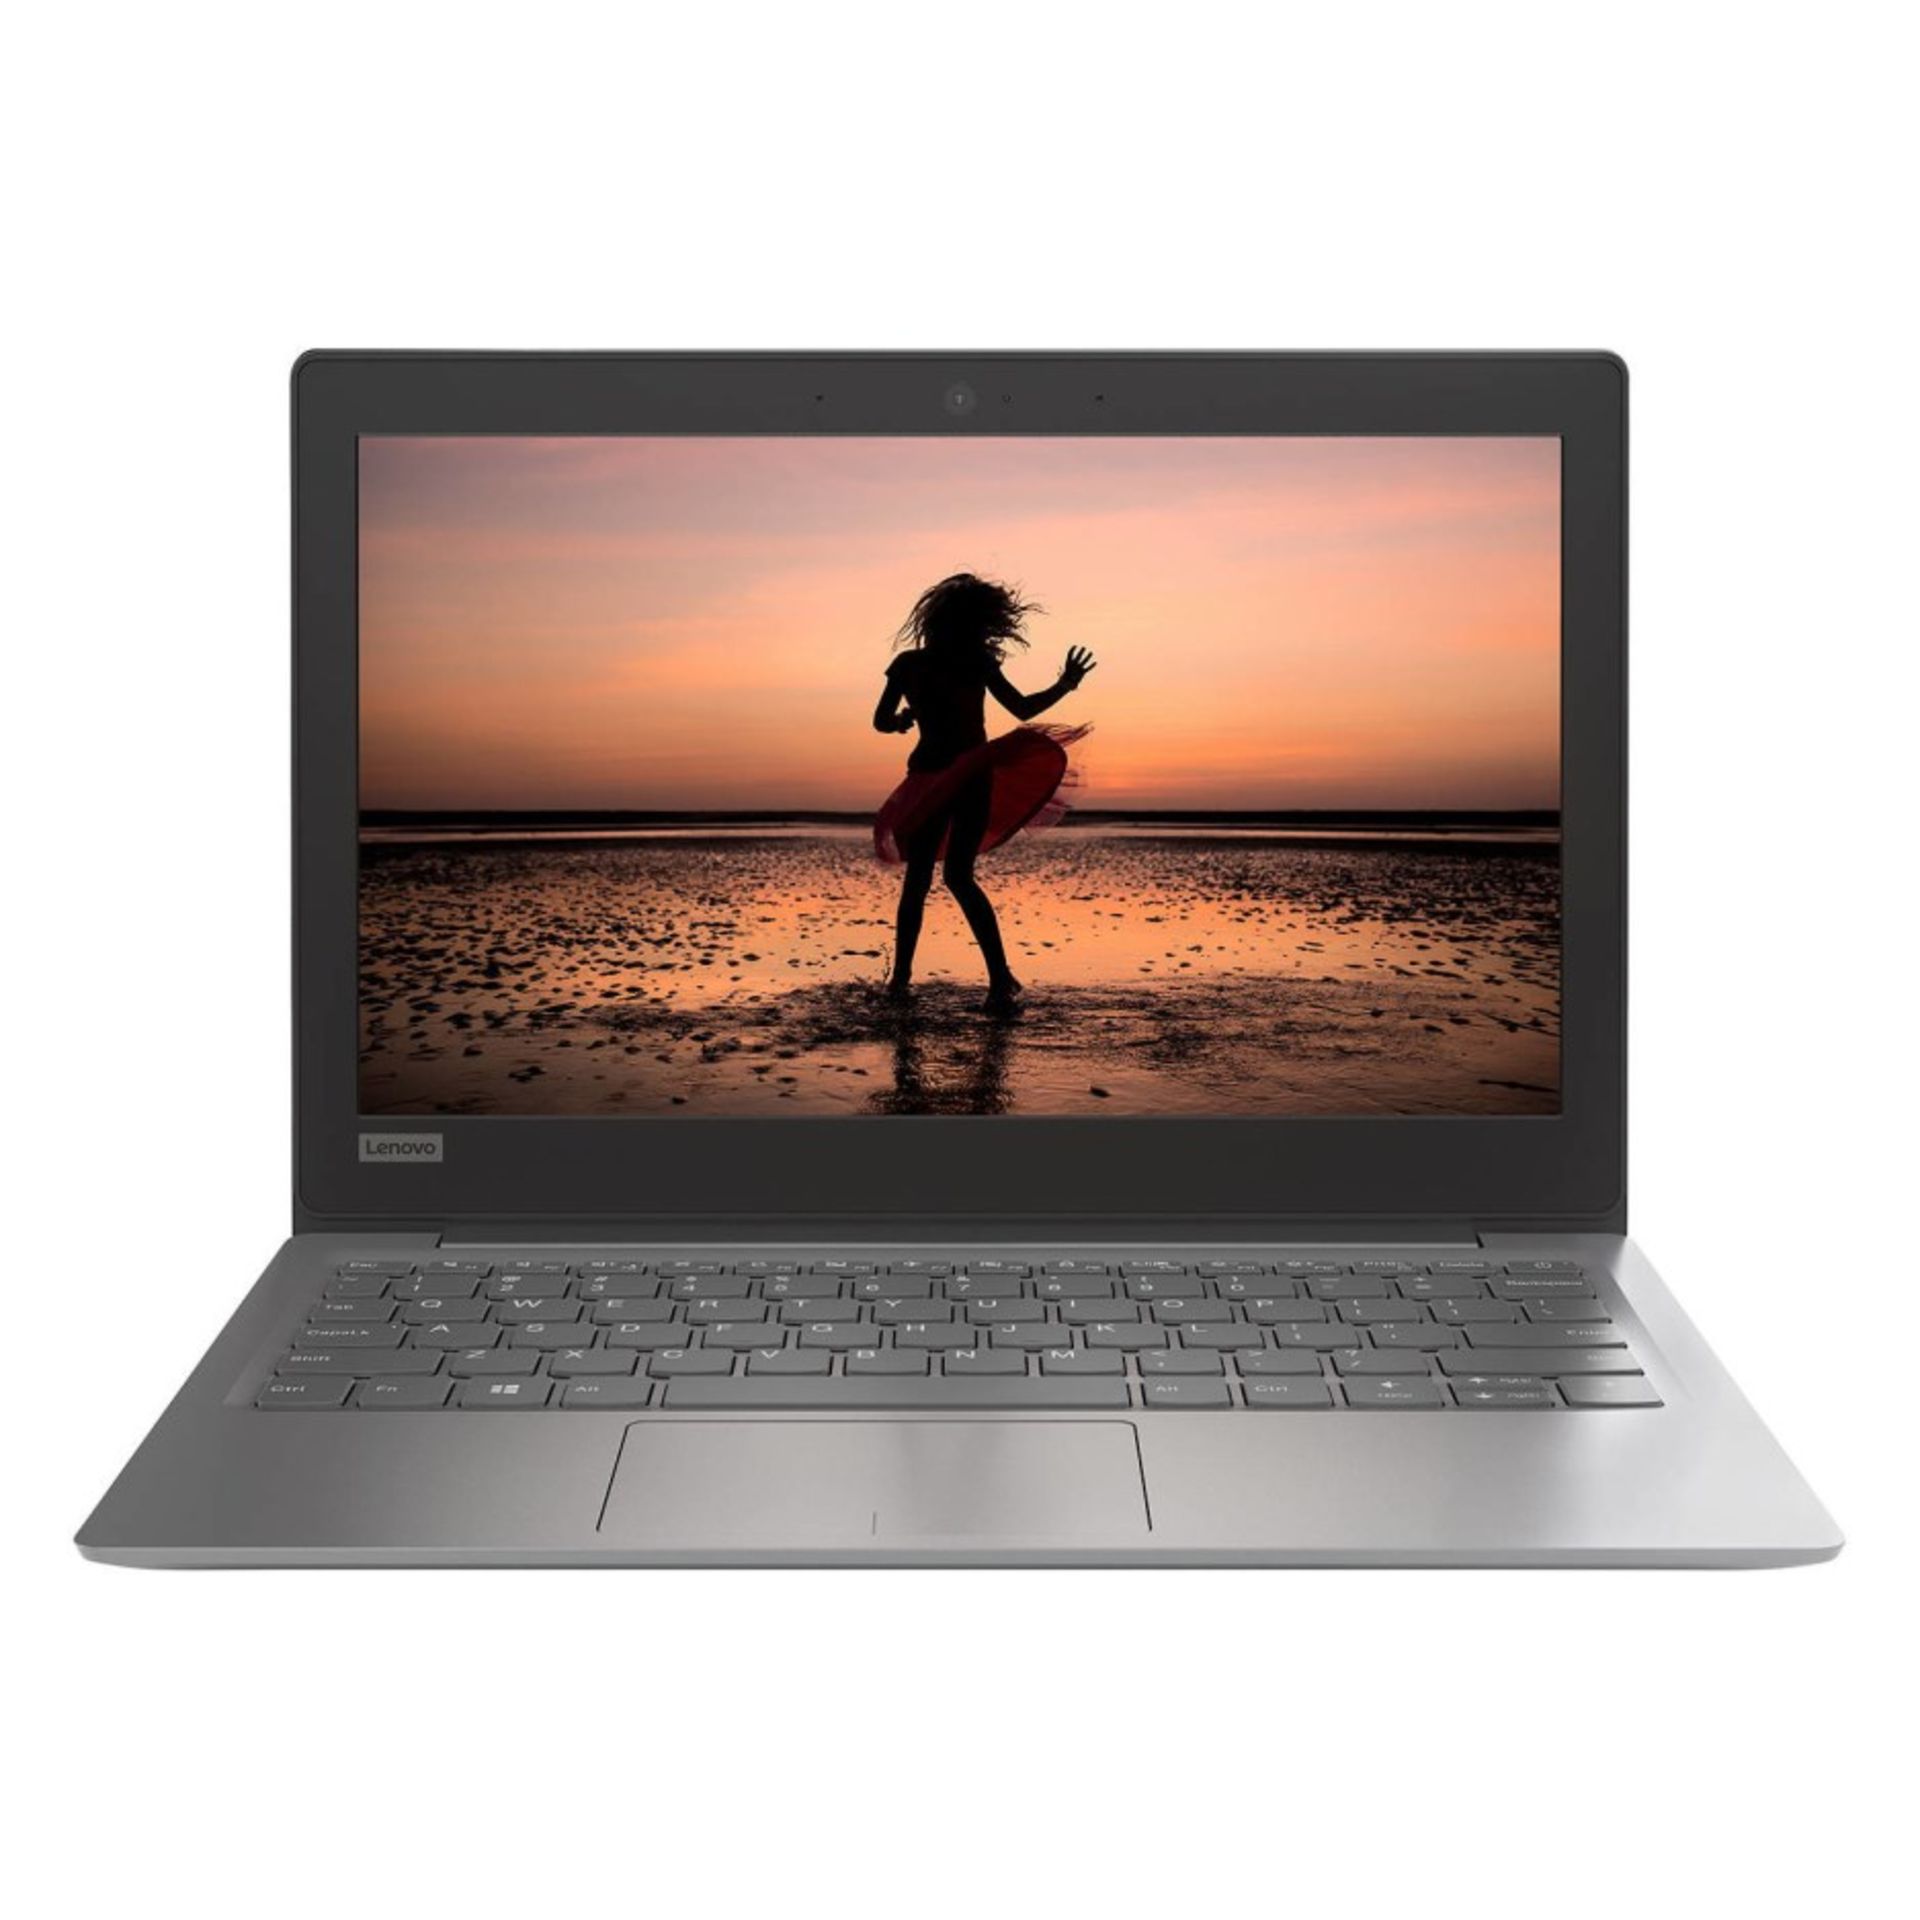 (22) 1 x Grade B - Lenovo Ideapad 110S SILVER- 11.6" Light Weight Laptop Intel Dual Core, 32GB